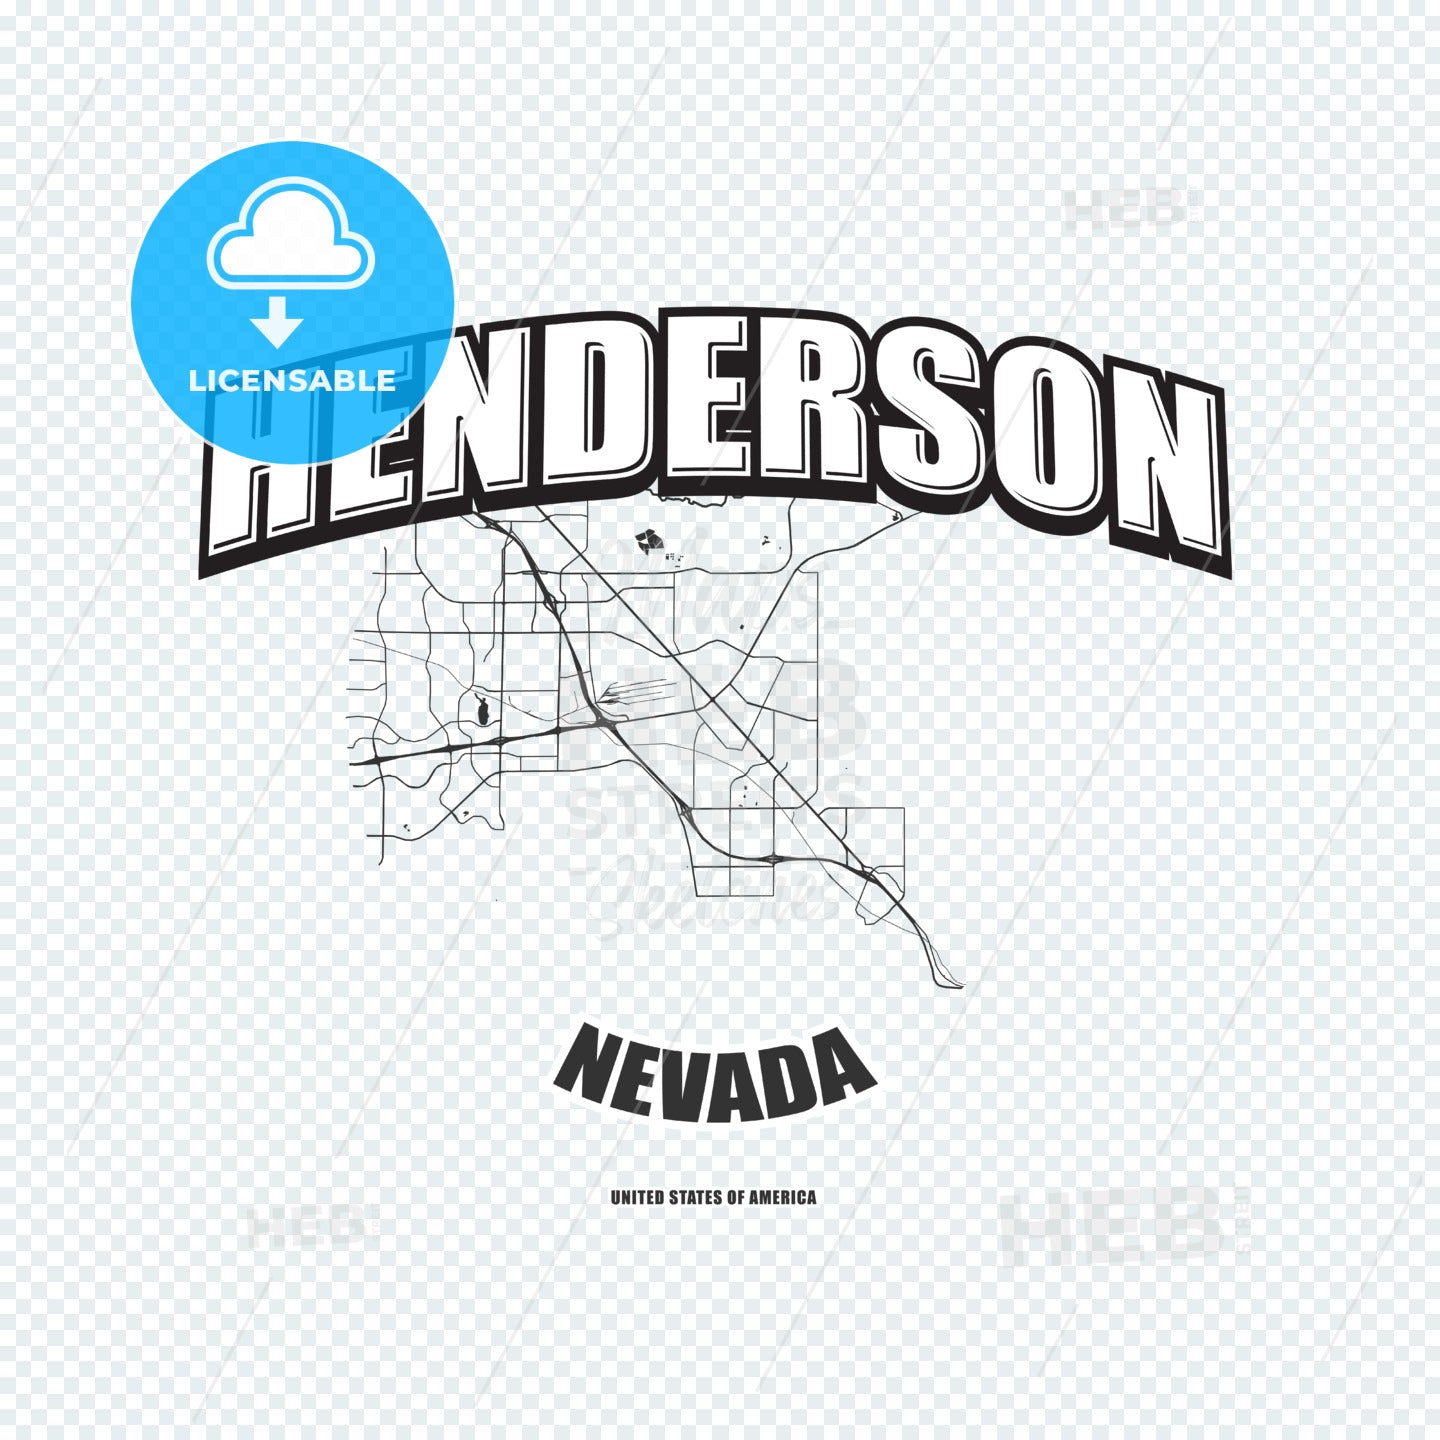 Henderson, Nevada, logo artwork – instant download